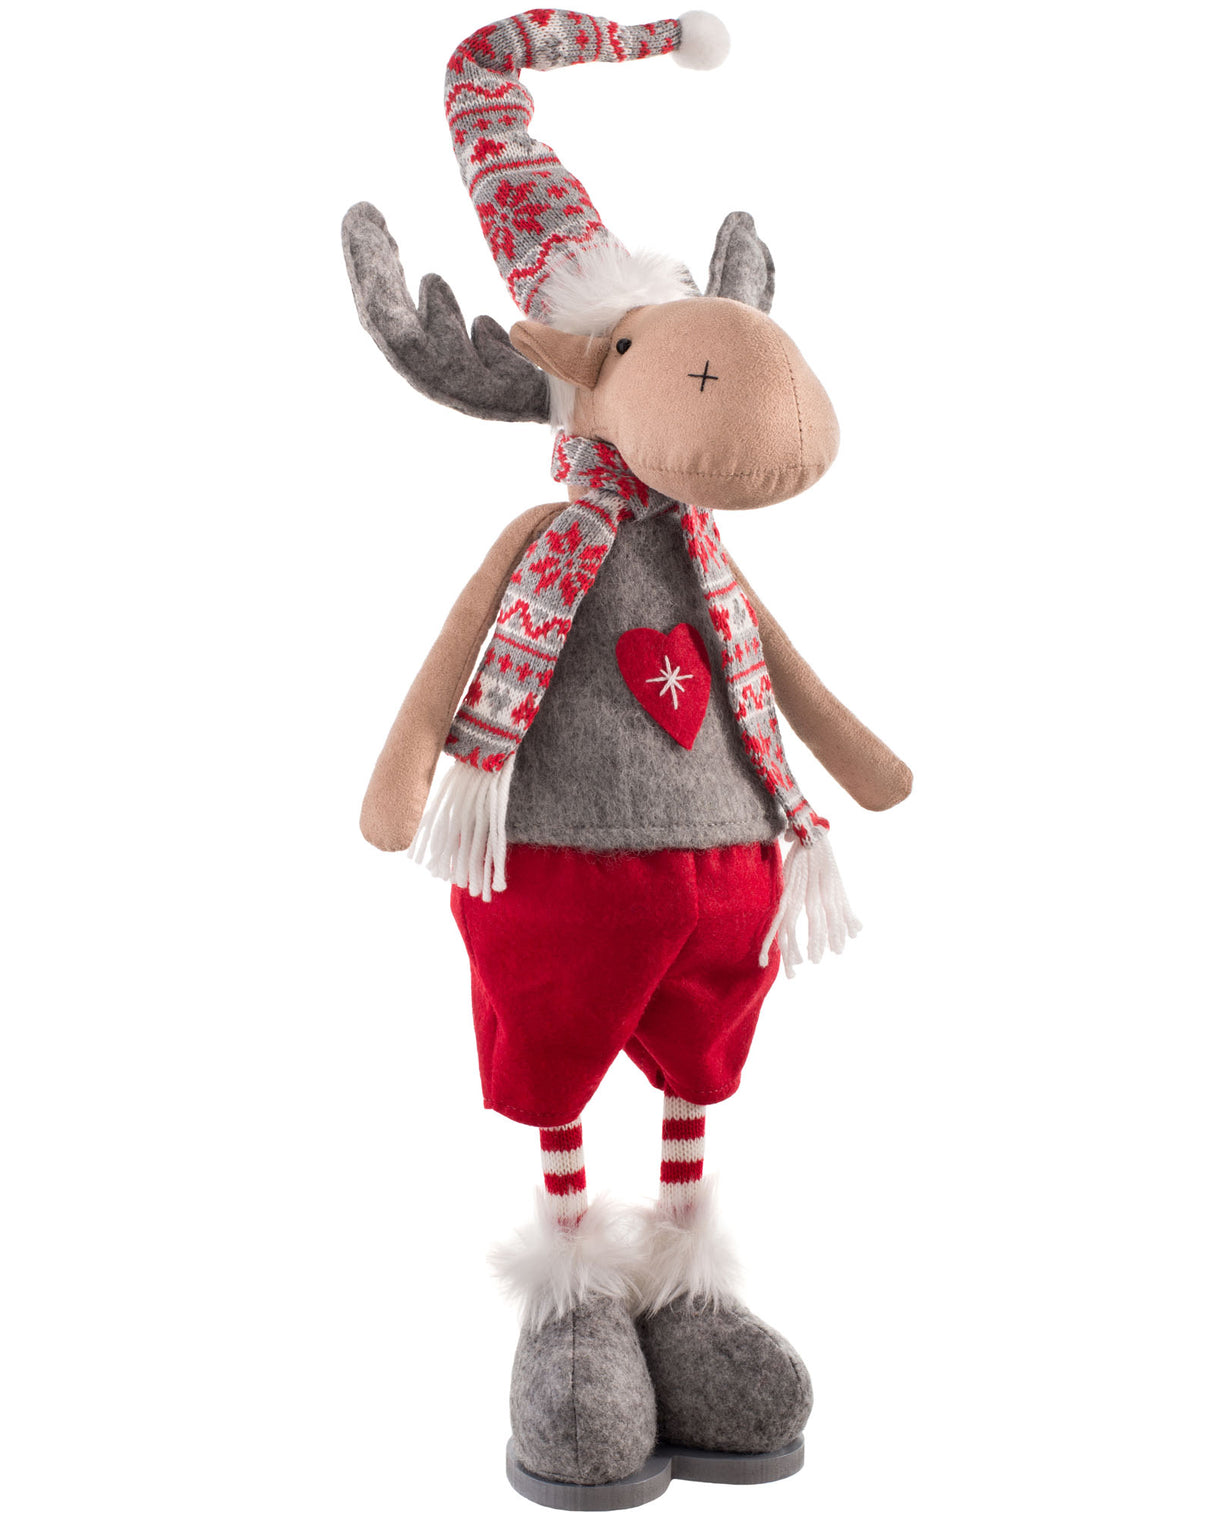 Standing Reindeer Figurine, Red and Grey, 43 cm